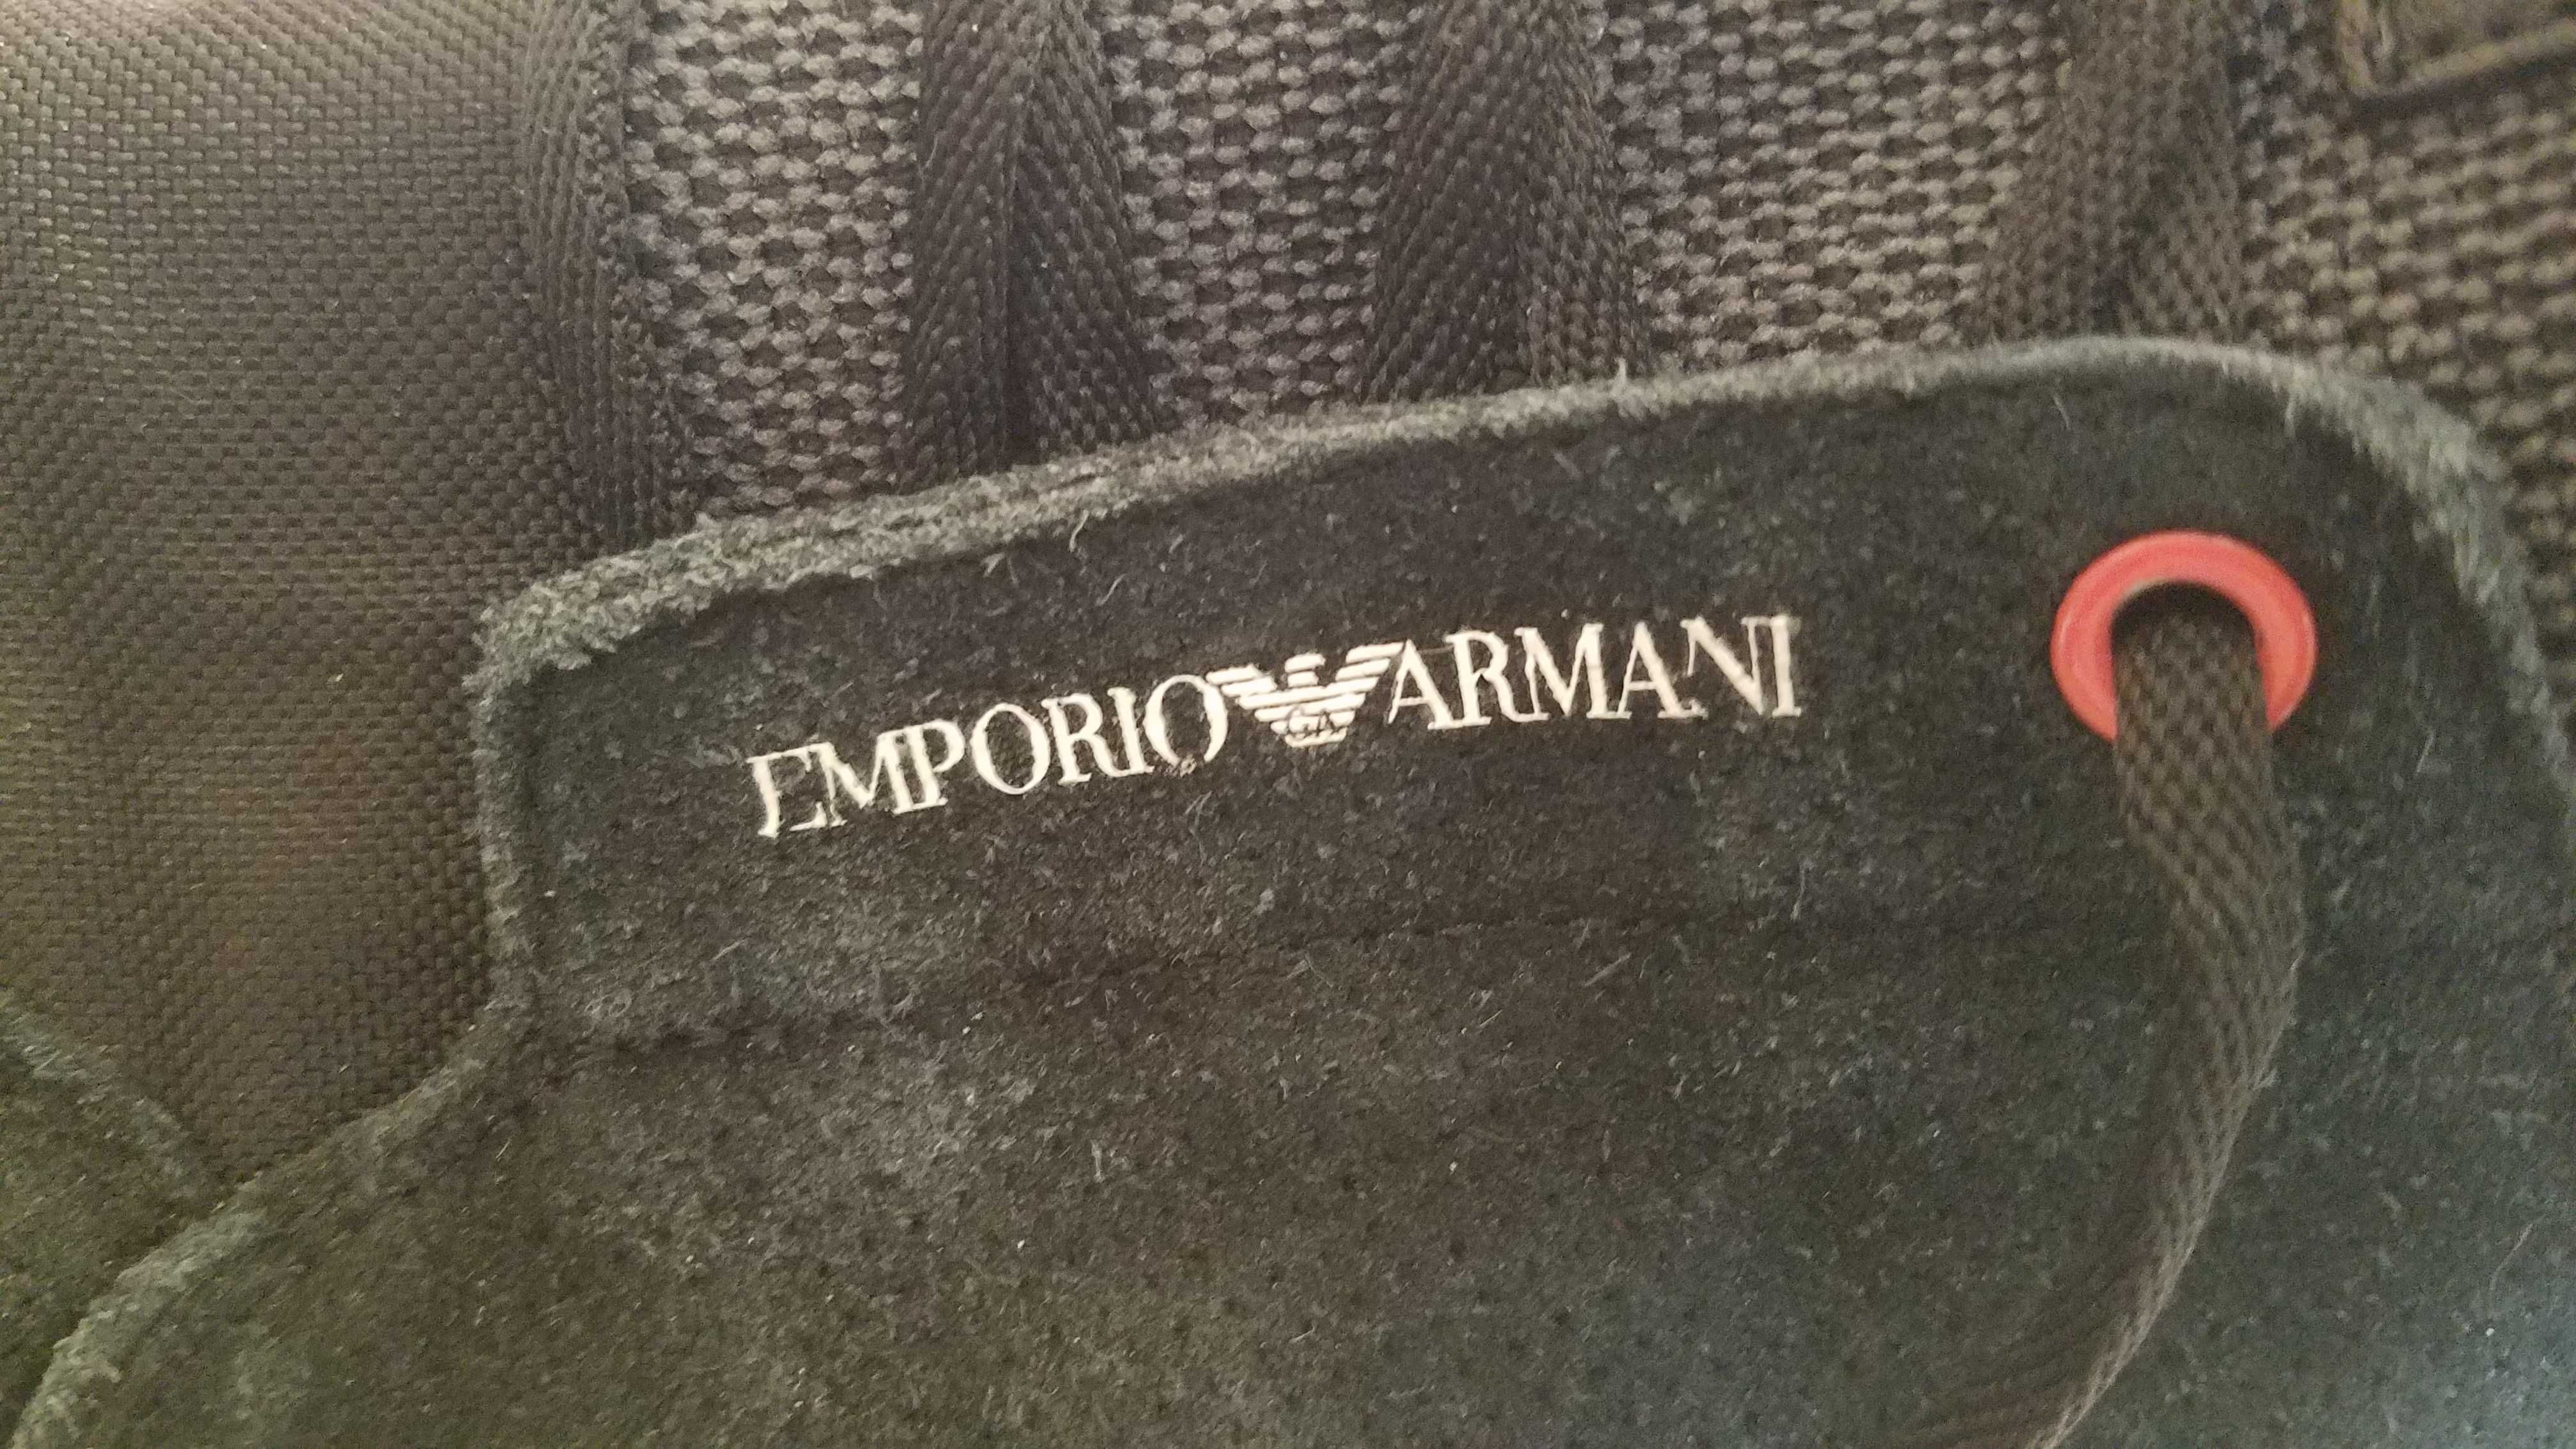 Buty Emporio Armani EUR43 27.7cm Skóra* półbuty skórzane sneakersy GA